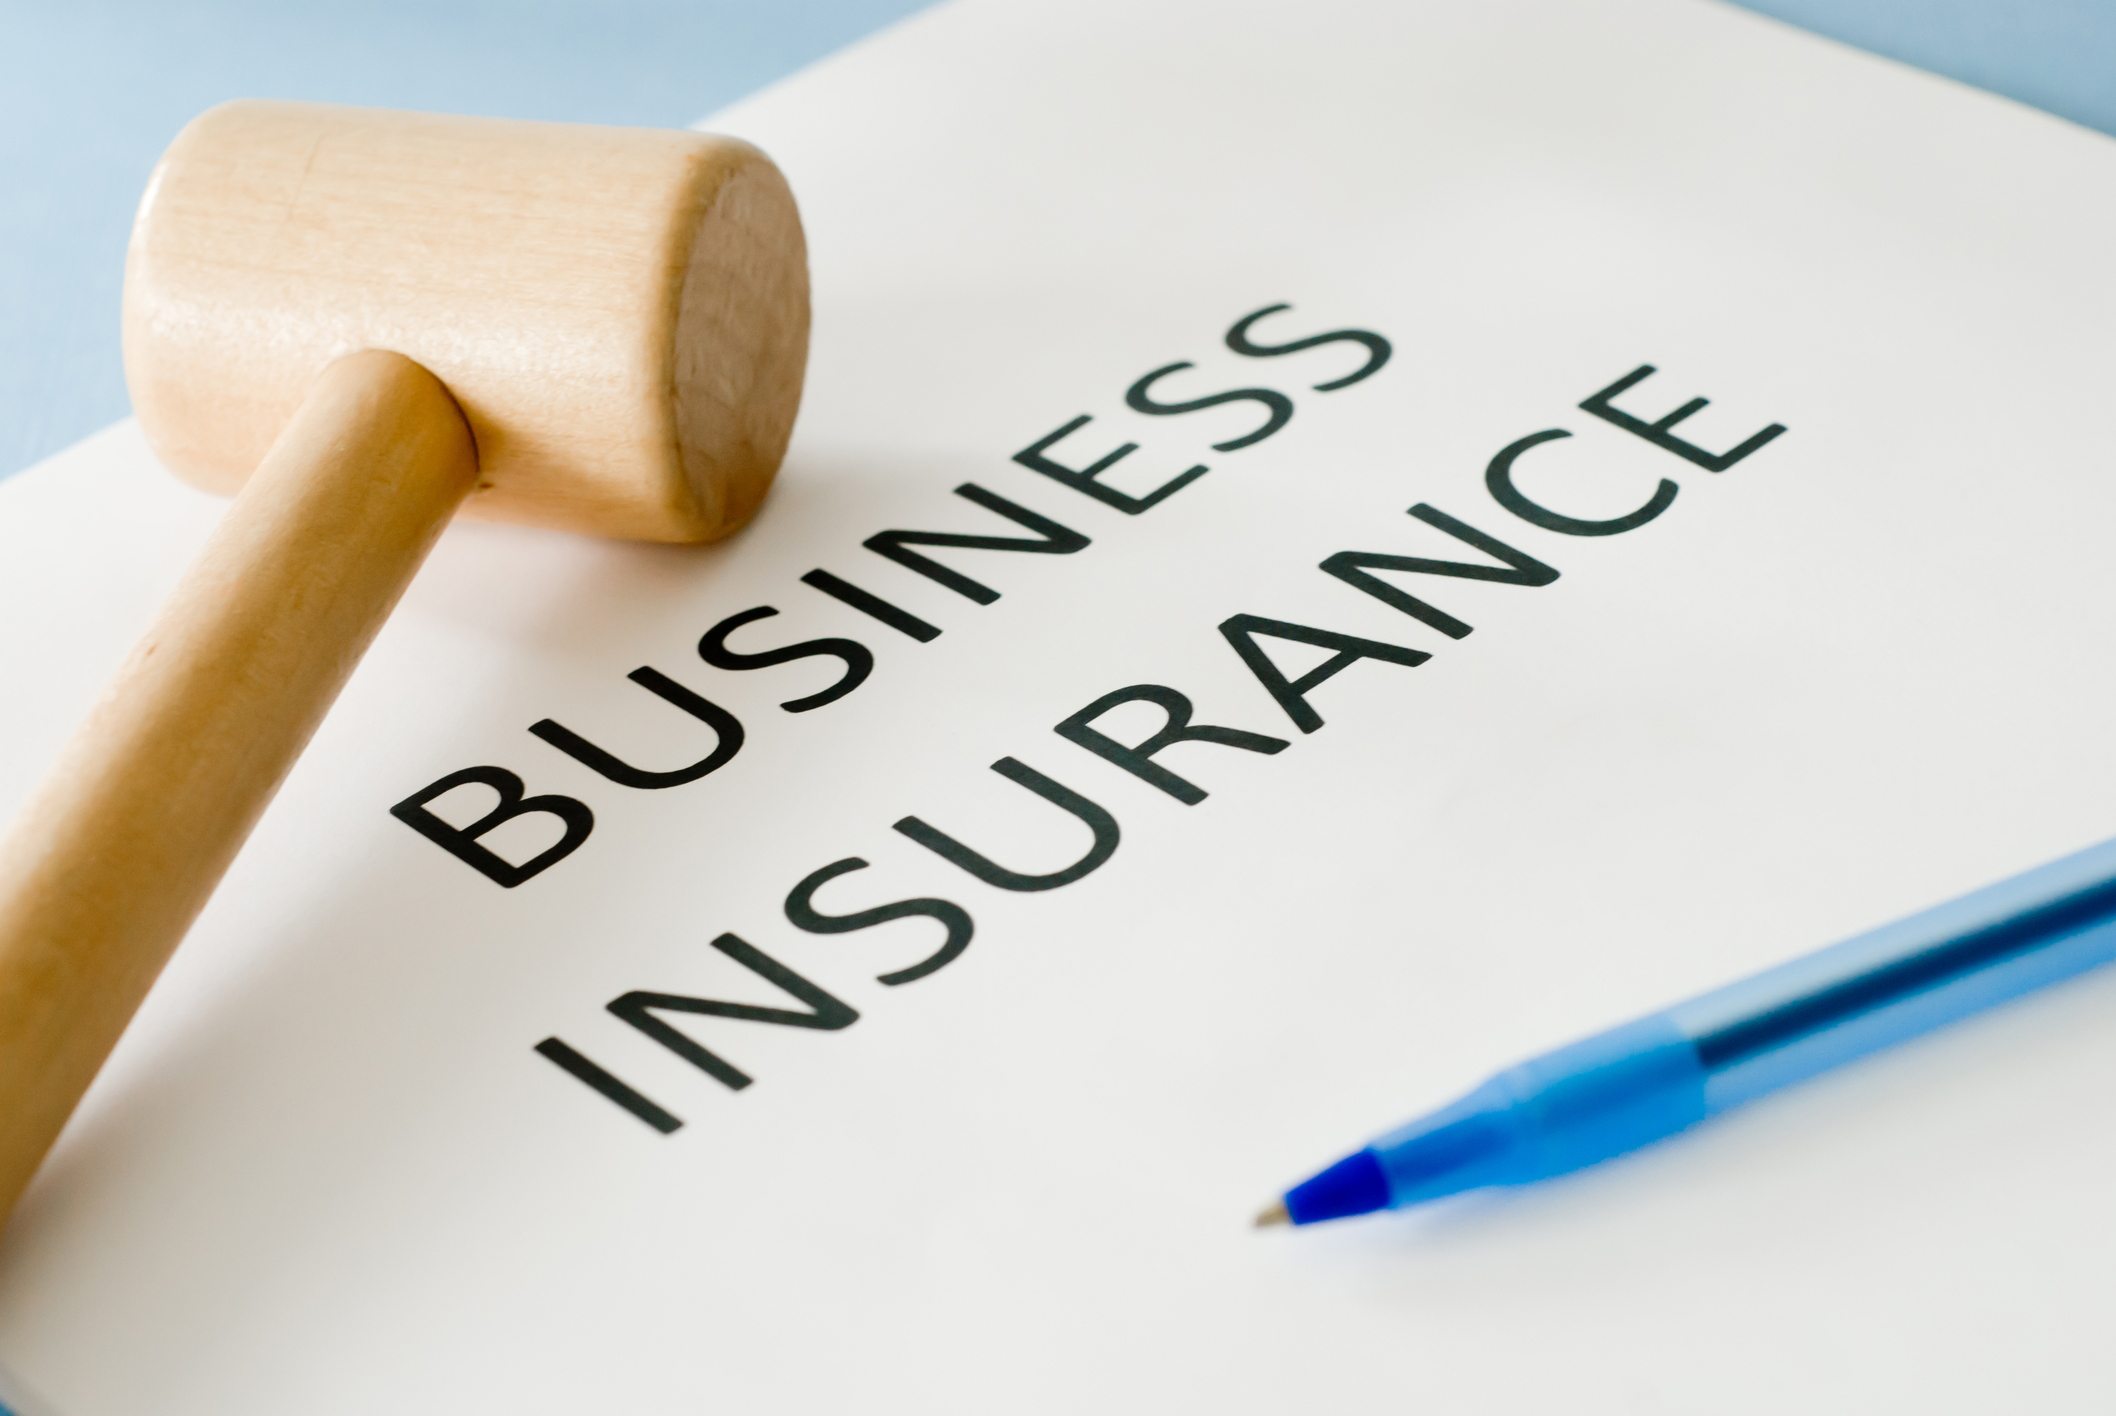 6 biggest business insurance risks